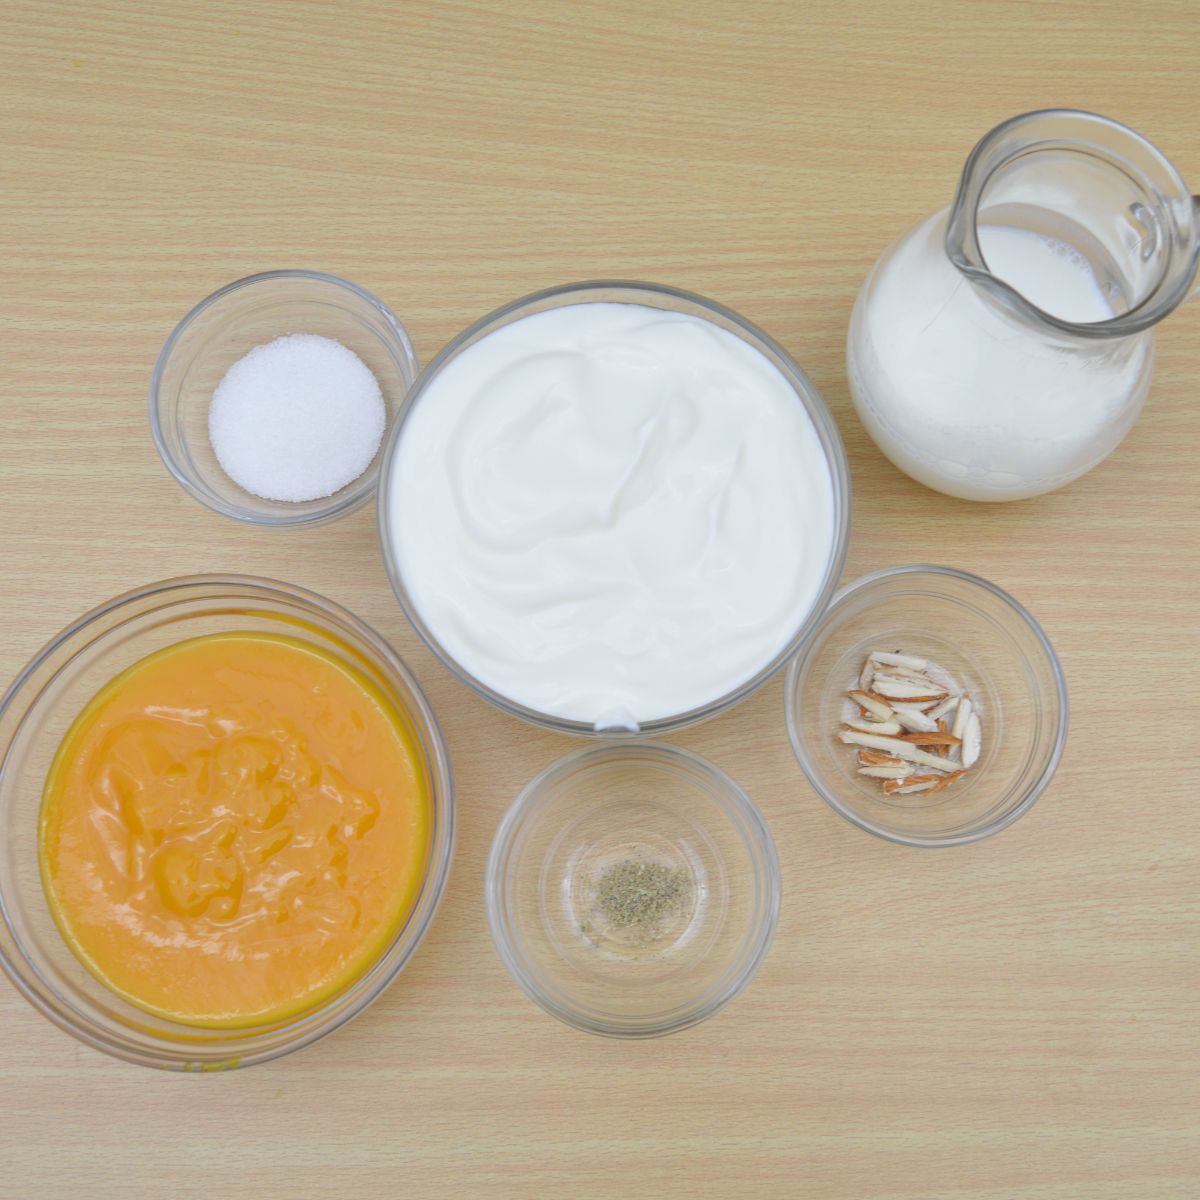 yogurt, milk, sugar, cardamom, almonds and mango pulp placed on a wooden table.